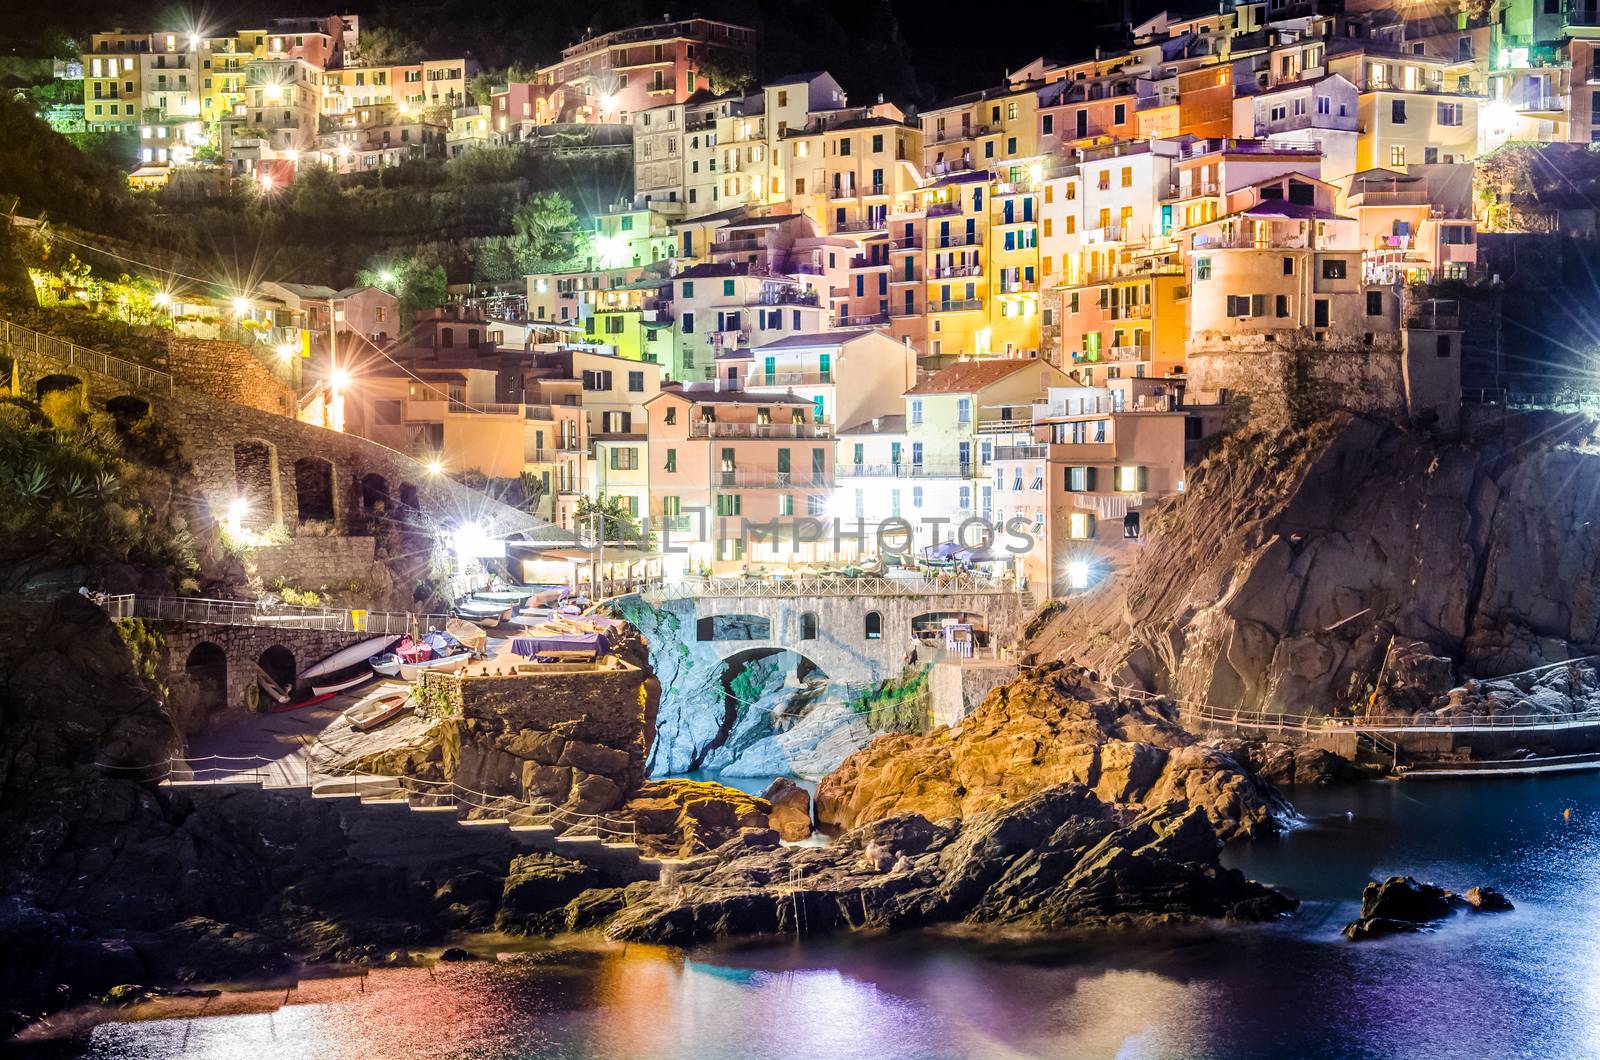 Scenic night view of colorful village Manarola in Cinque Terre, Italy